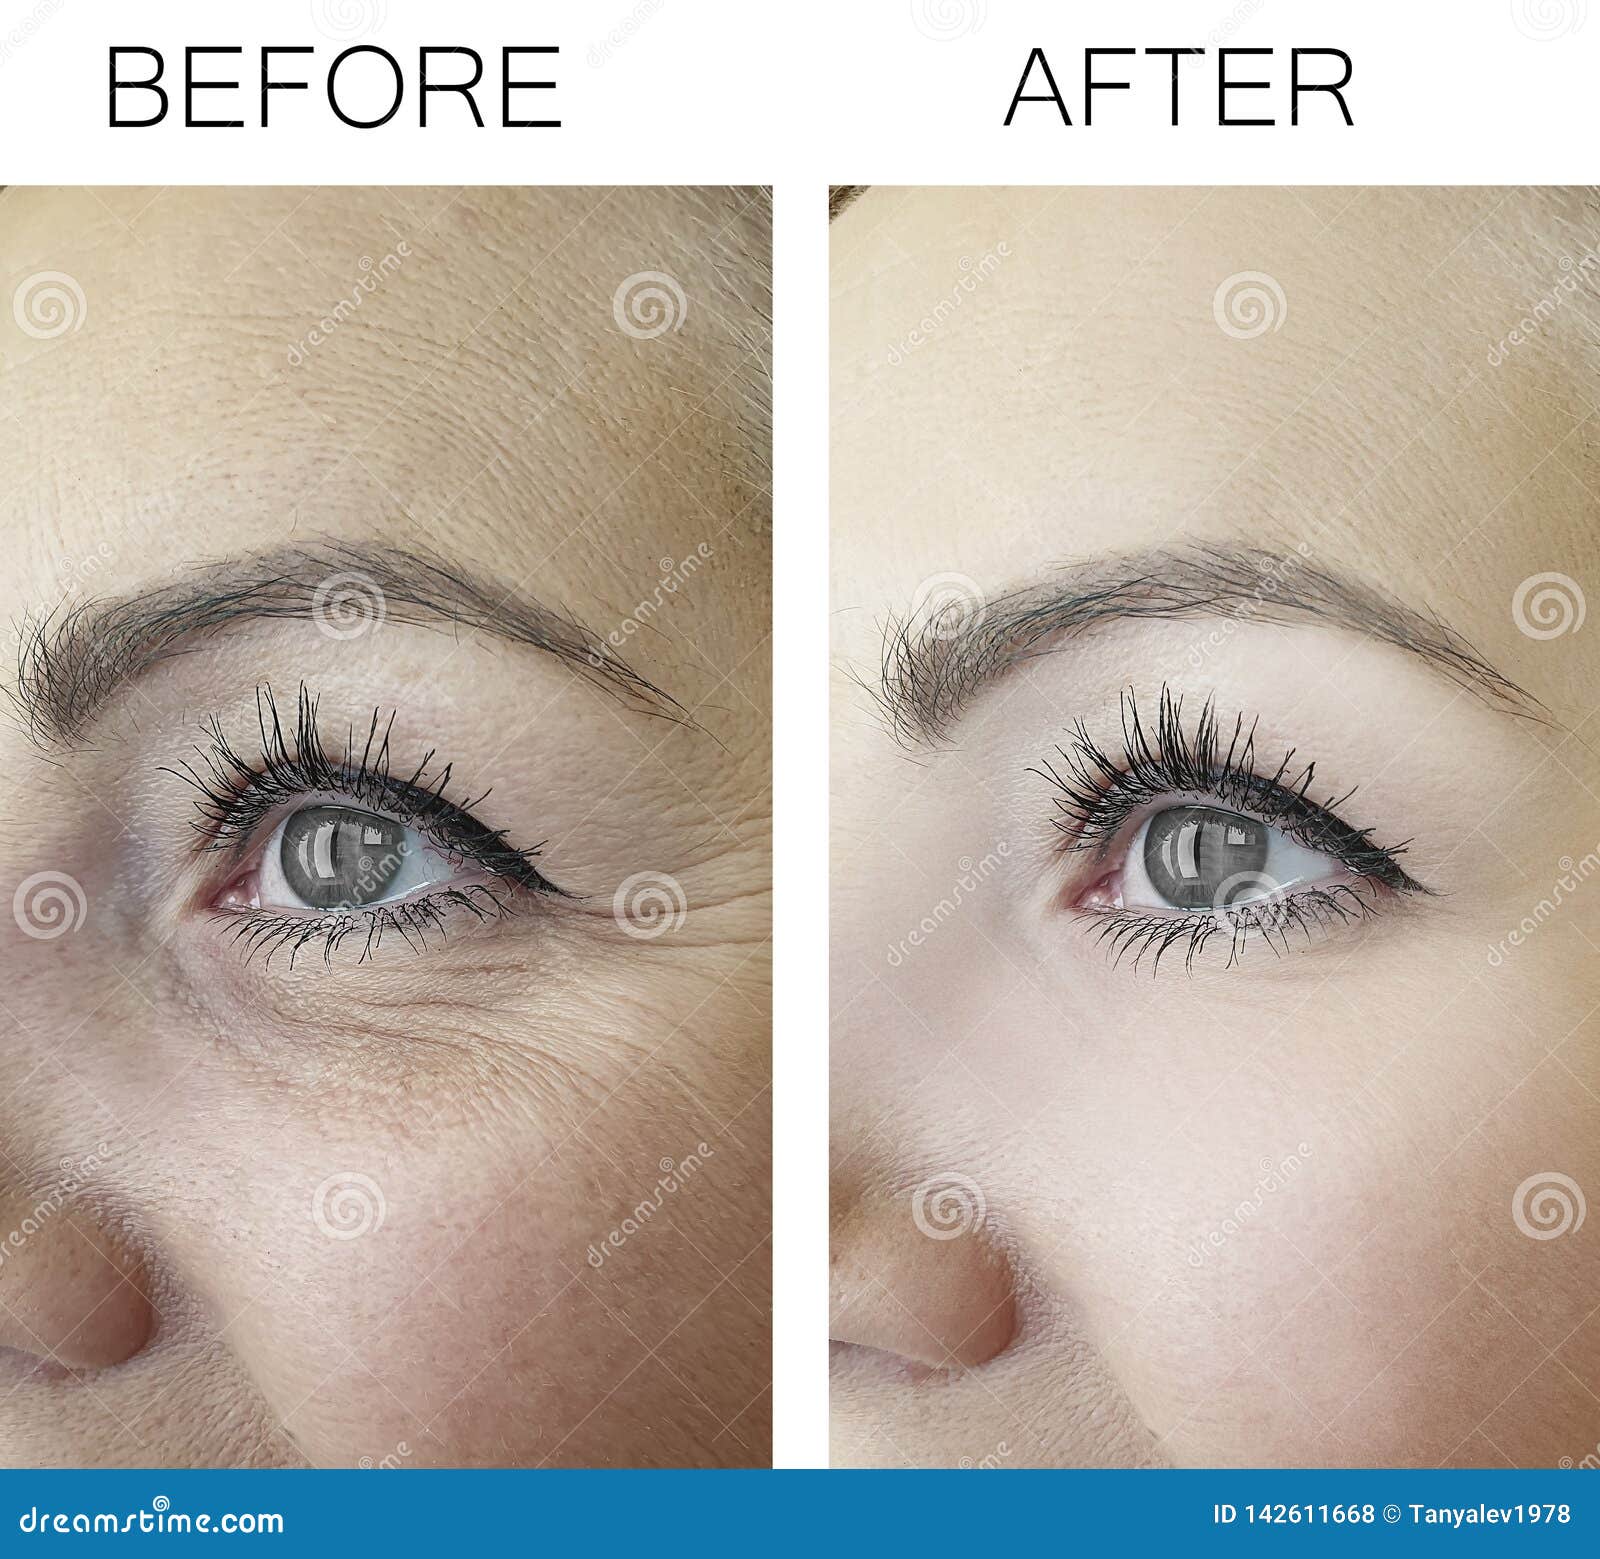 tratamiento anti aging eyes)